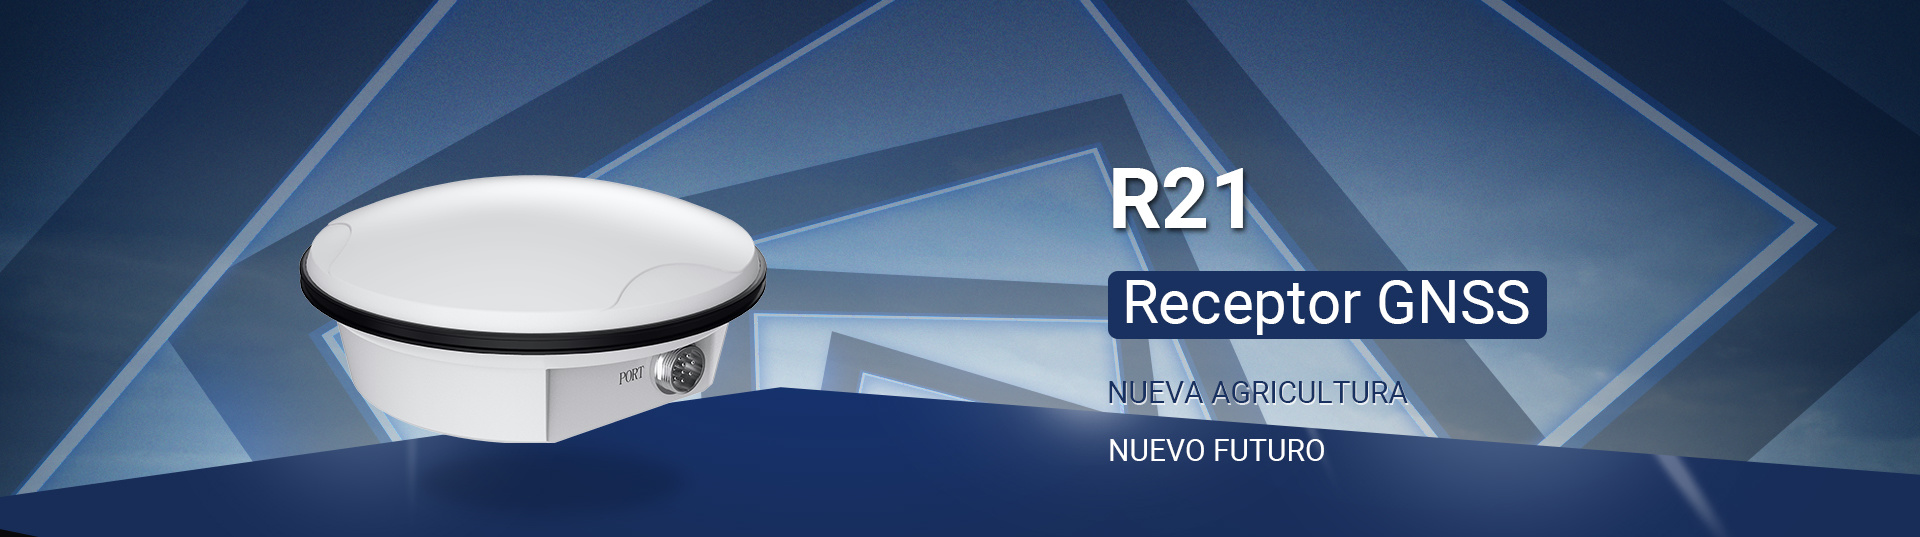 R21 Receptor GNSS